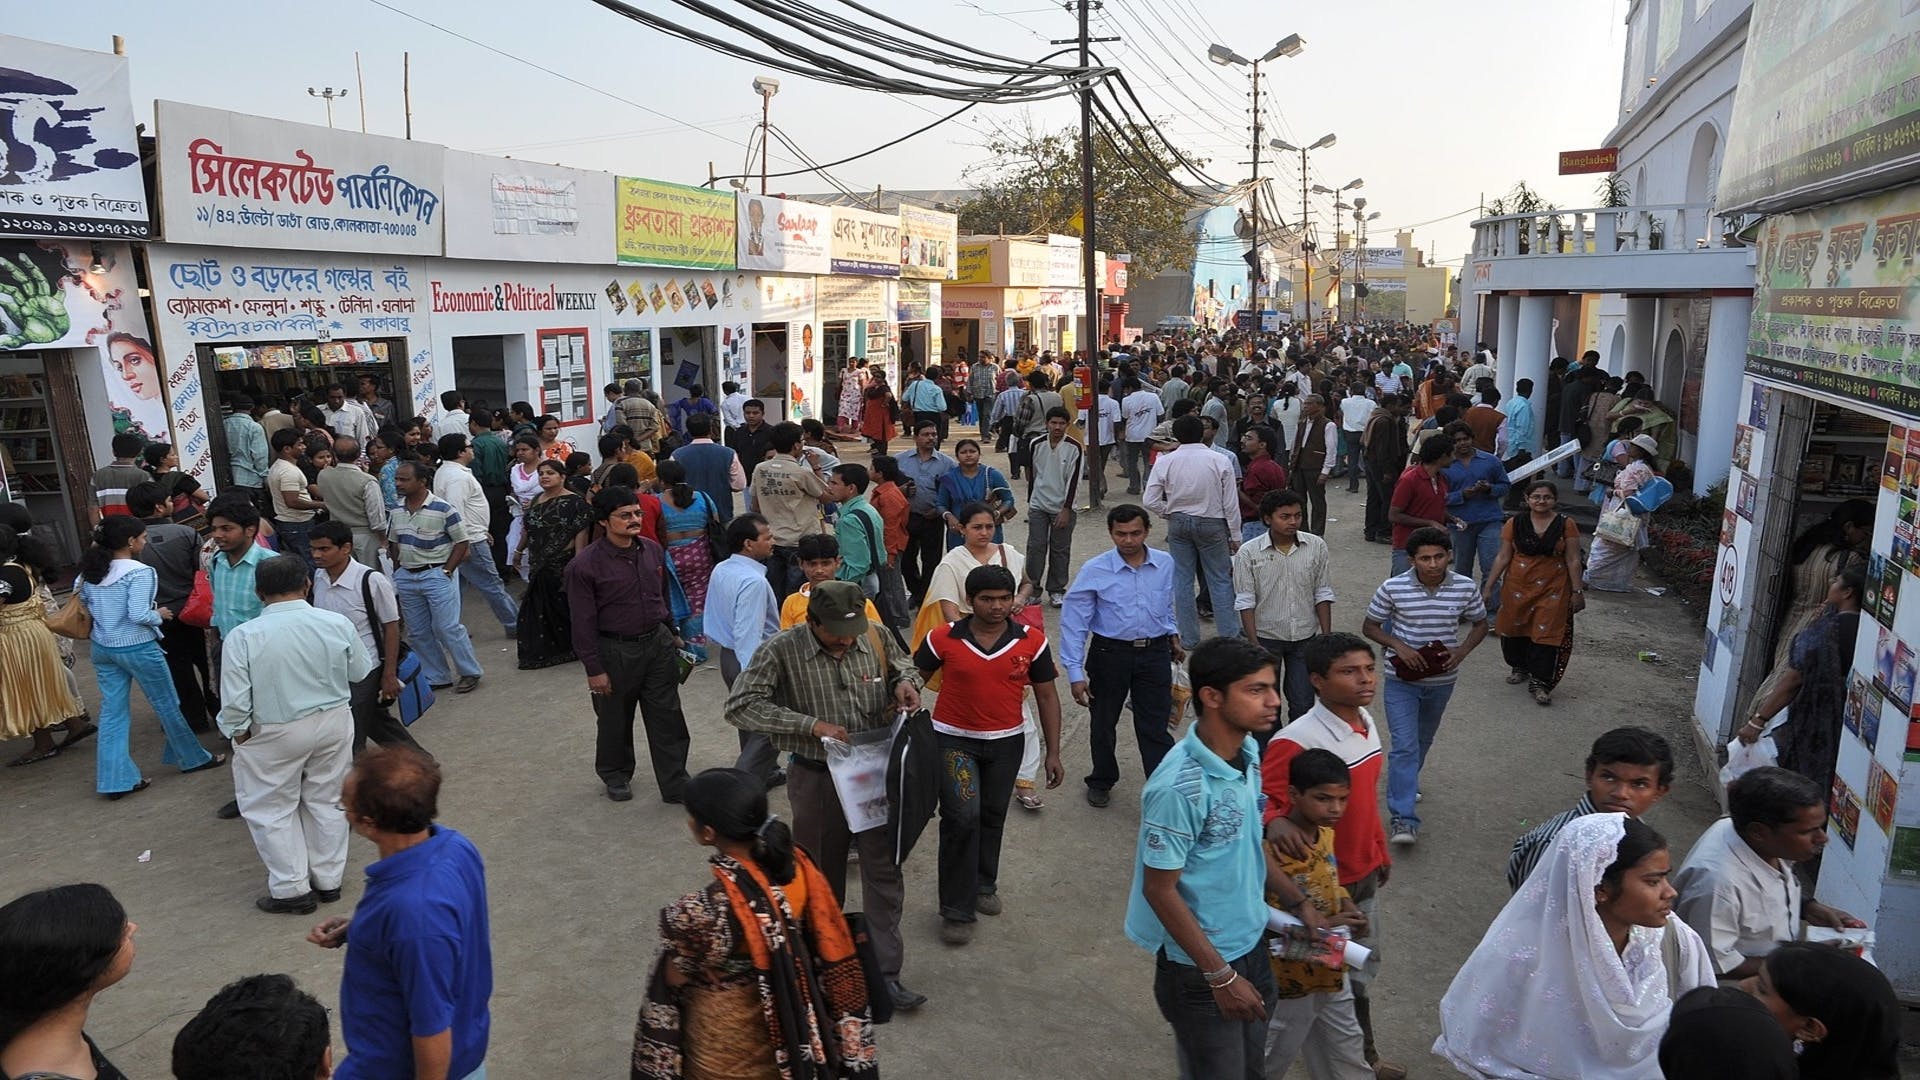 People,Crowd,Bazaar,Public space,Pedestrian,Event,Marketplace,Market,Temple,Street